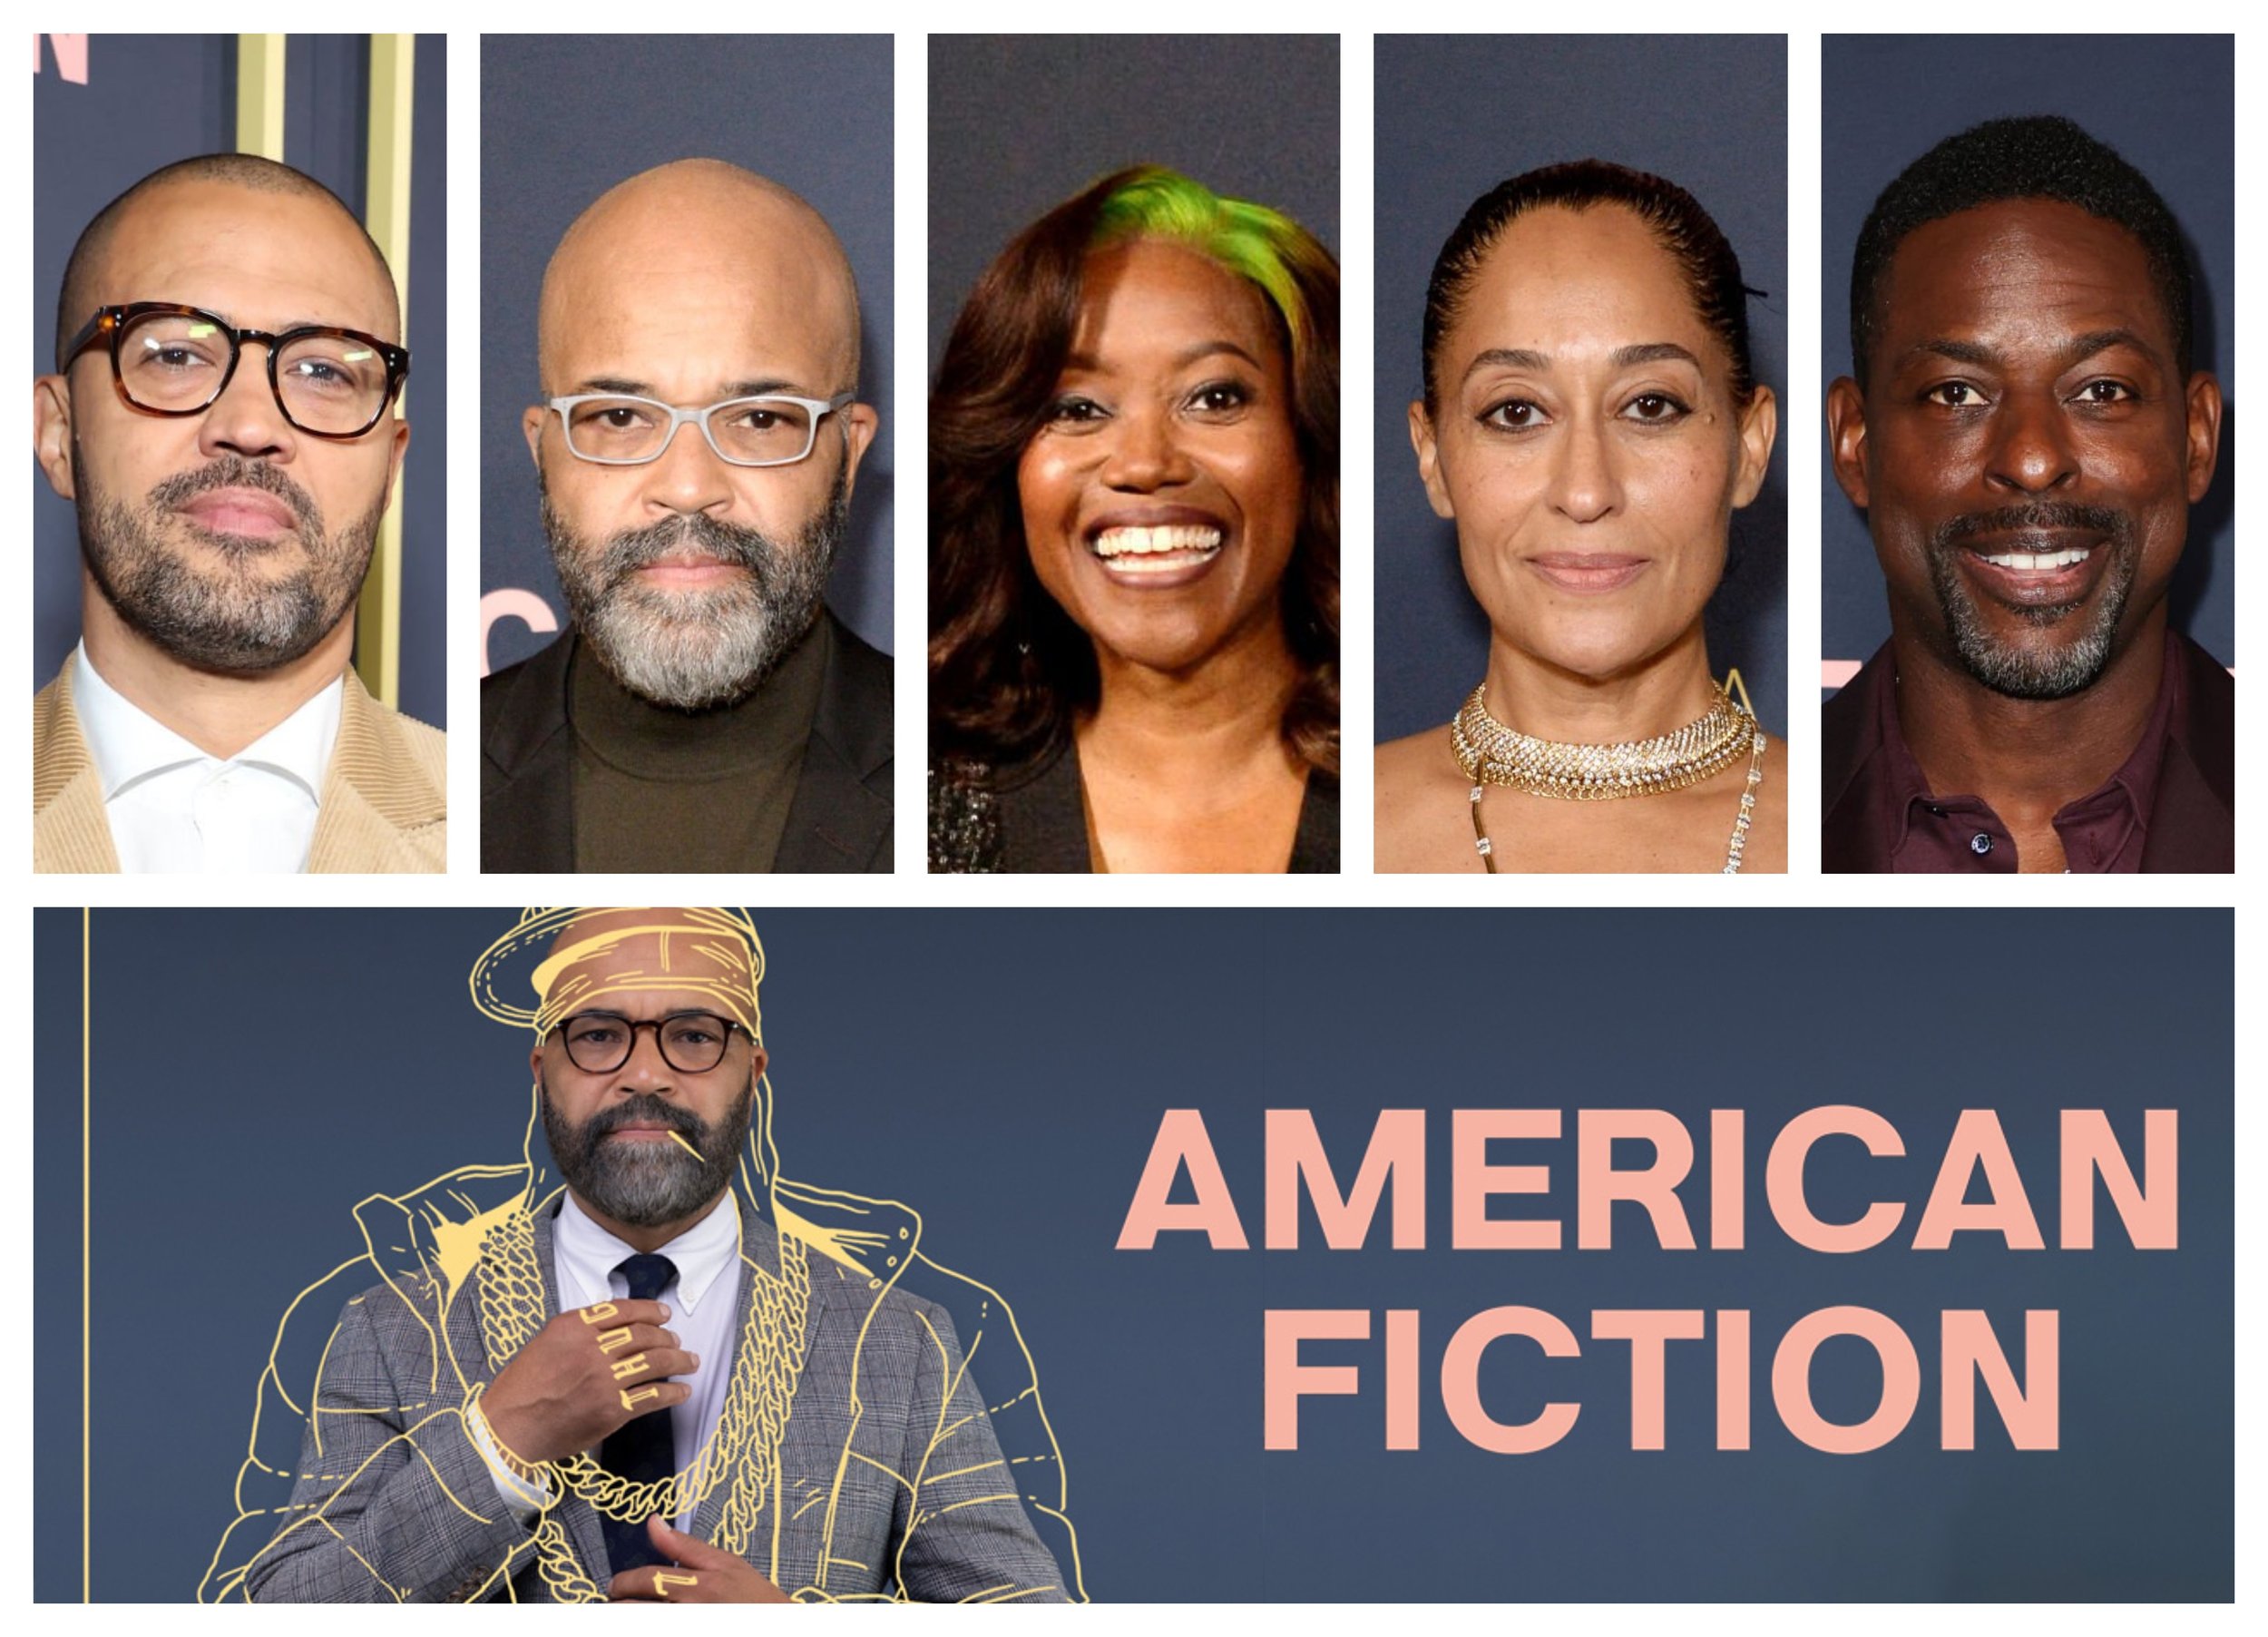 American Fiction cast cover 2.jpg